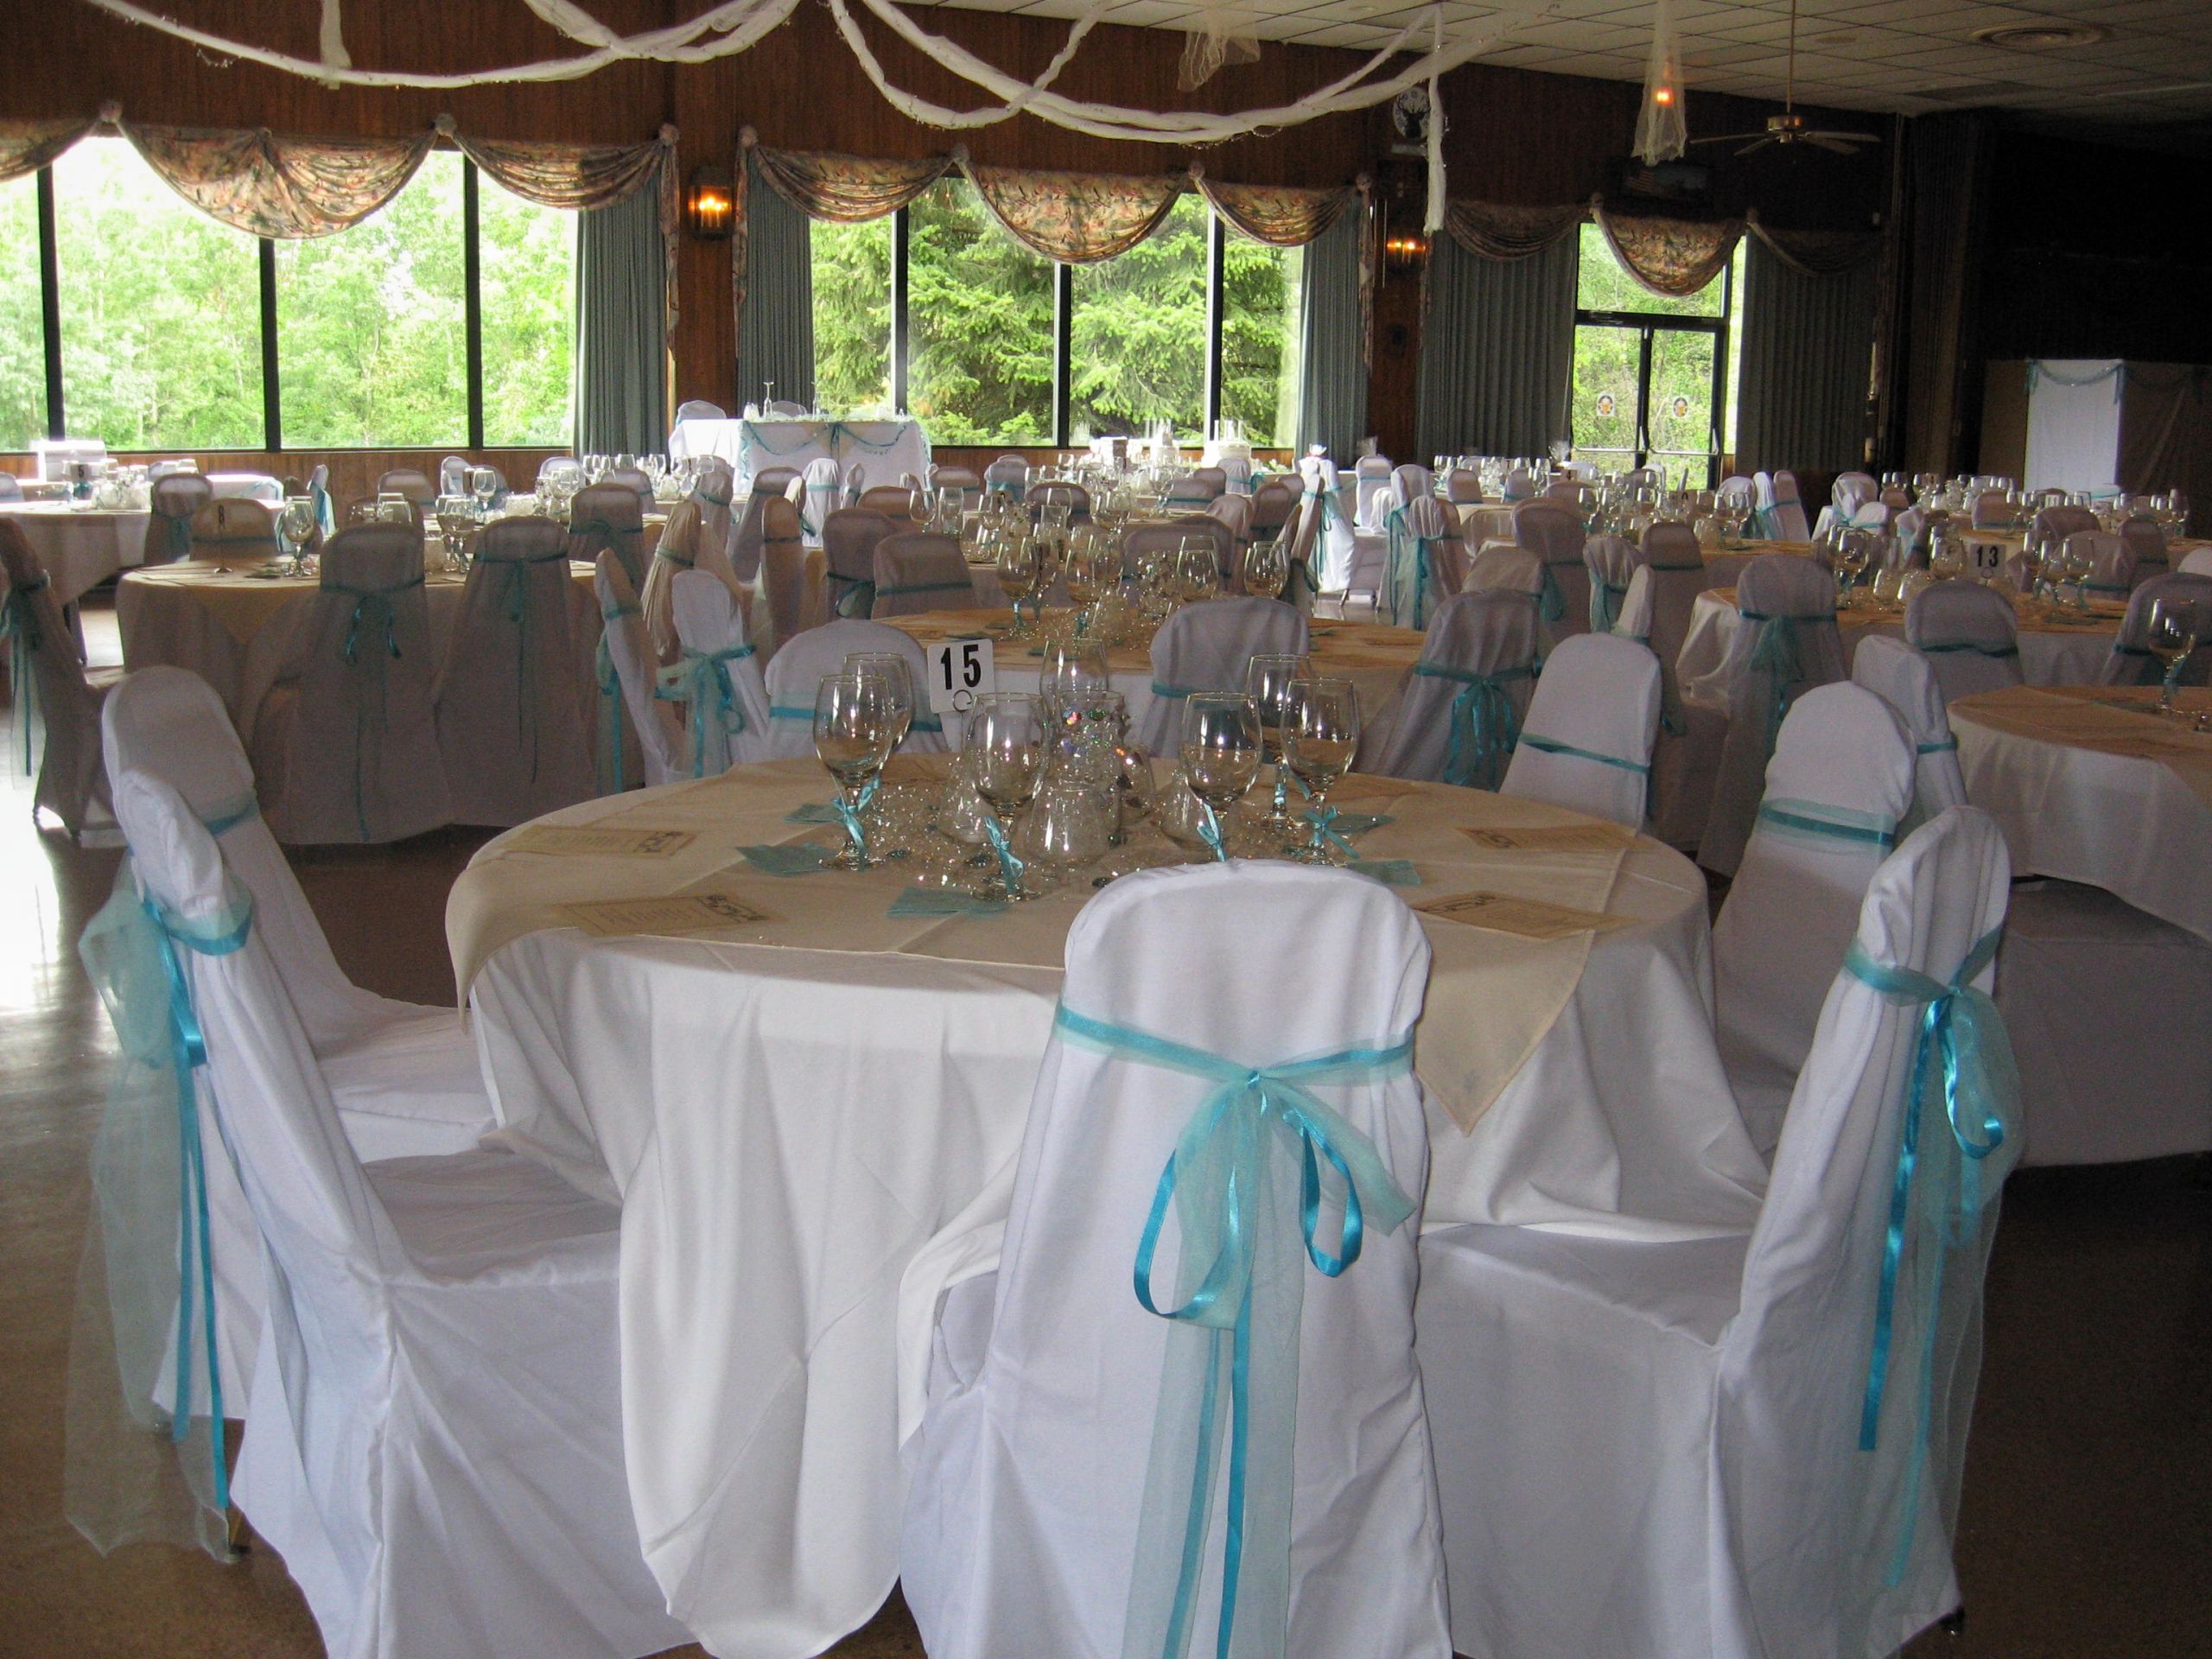 Inexpensive Wedding Venues In Ny
 Colonie Elks of Latham NY Wedding Hall Review Albany NY